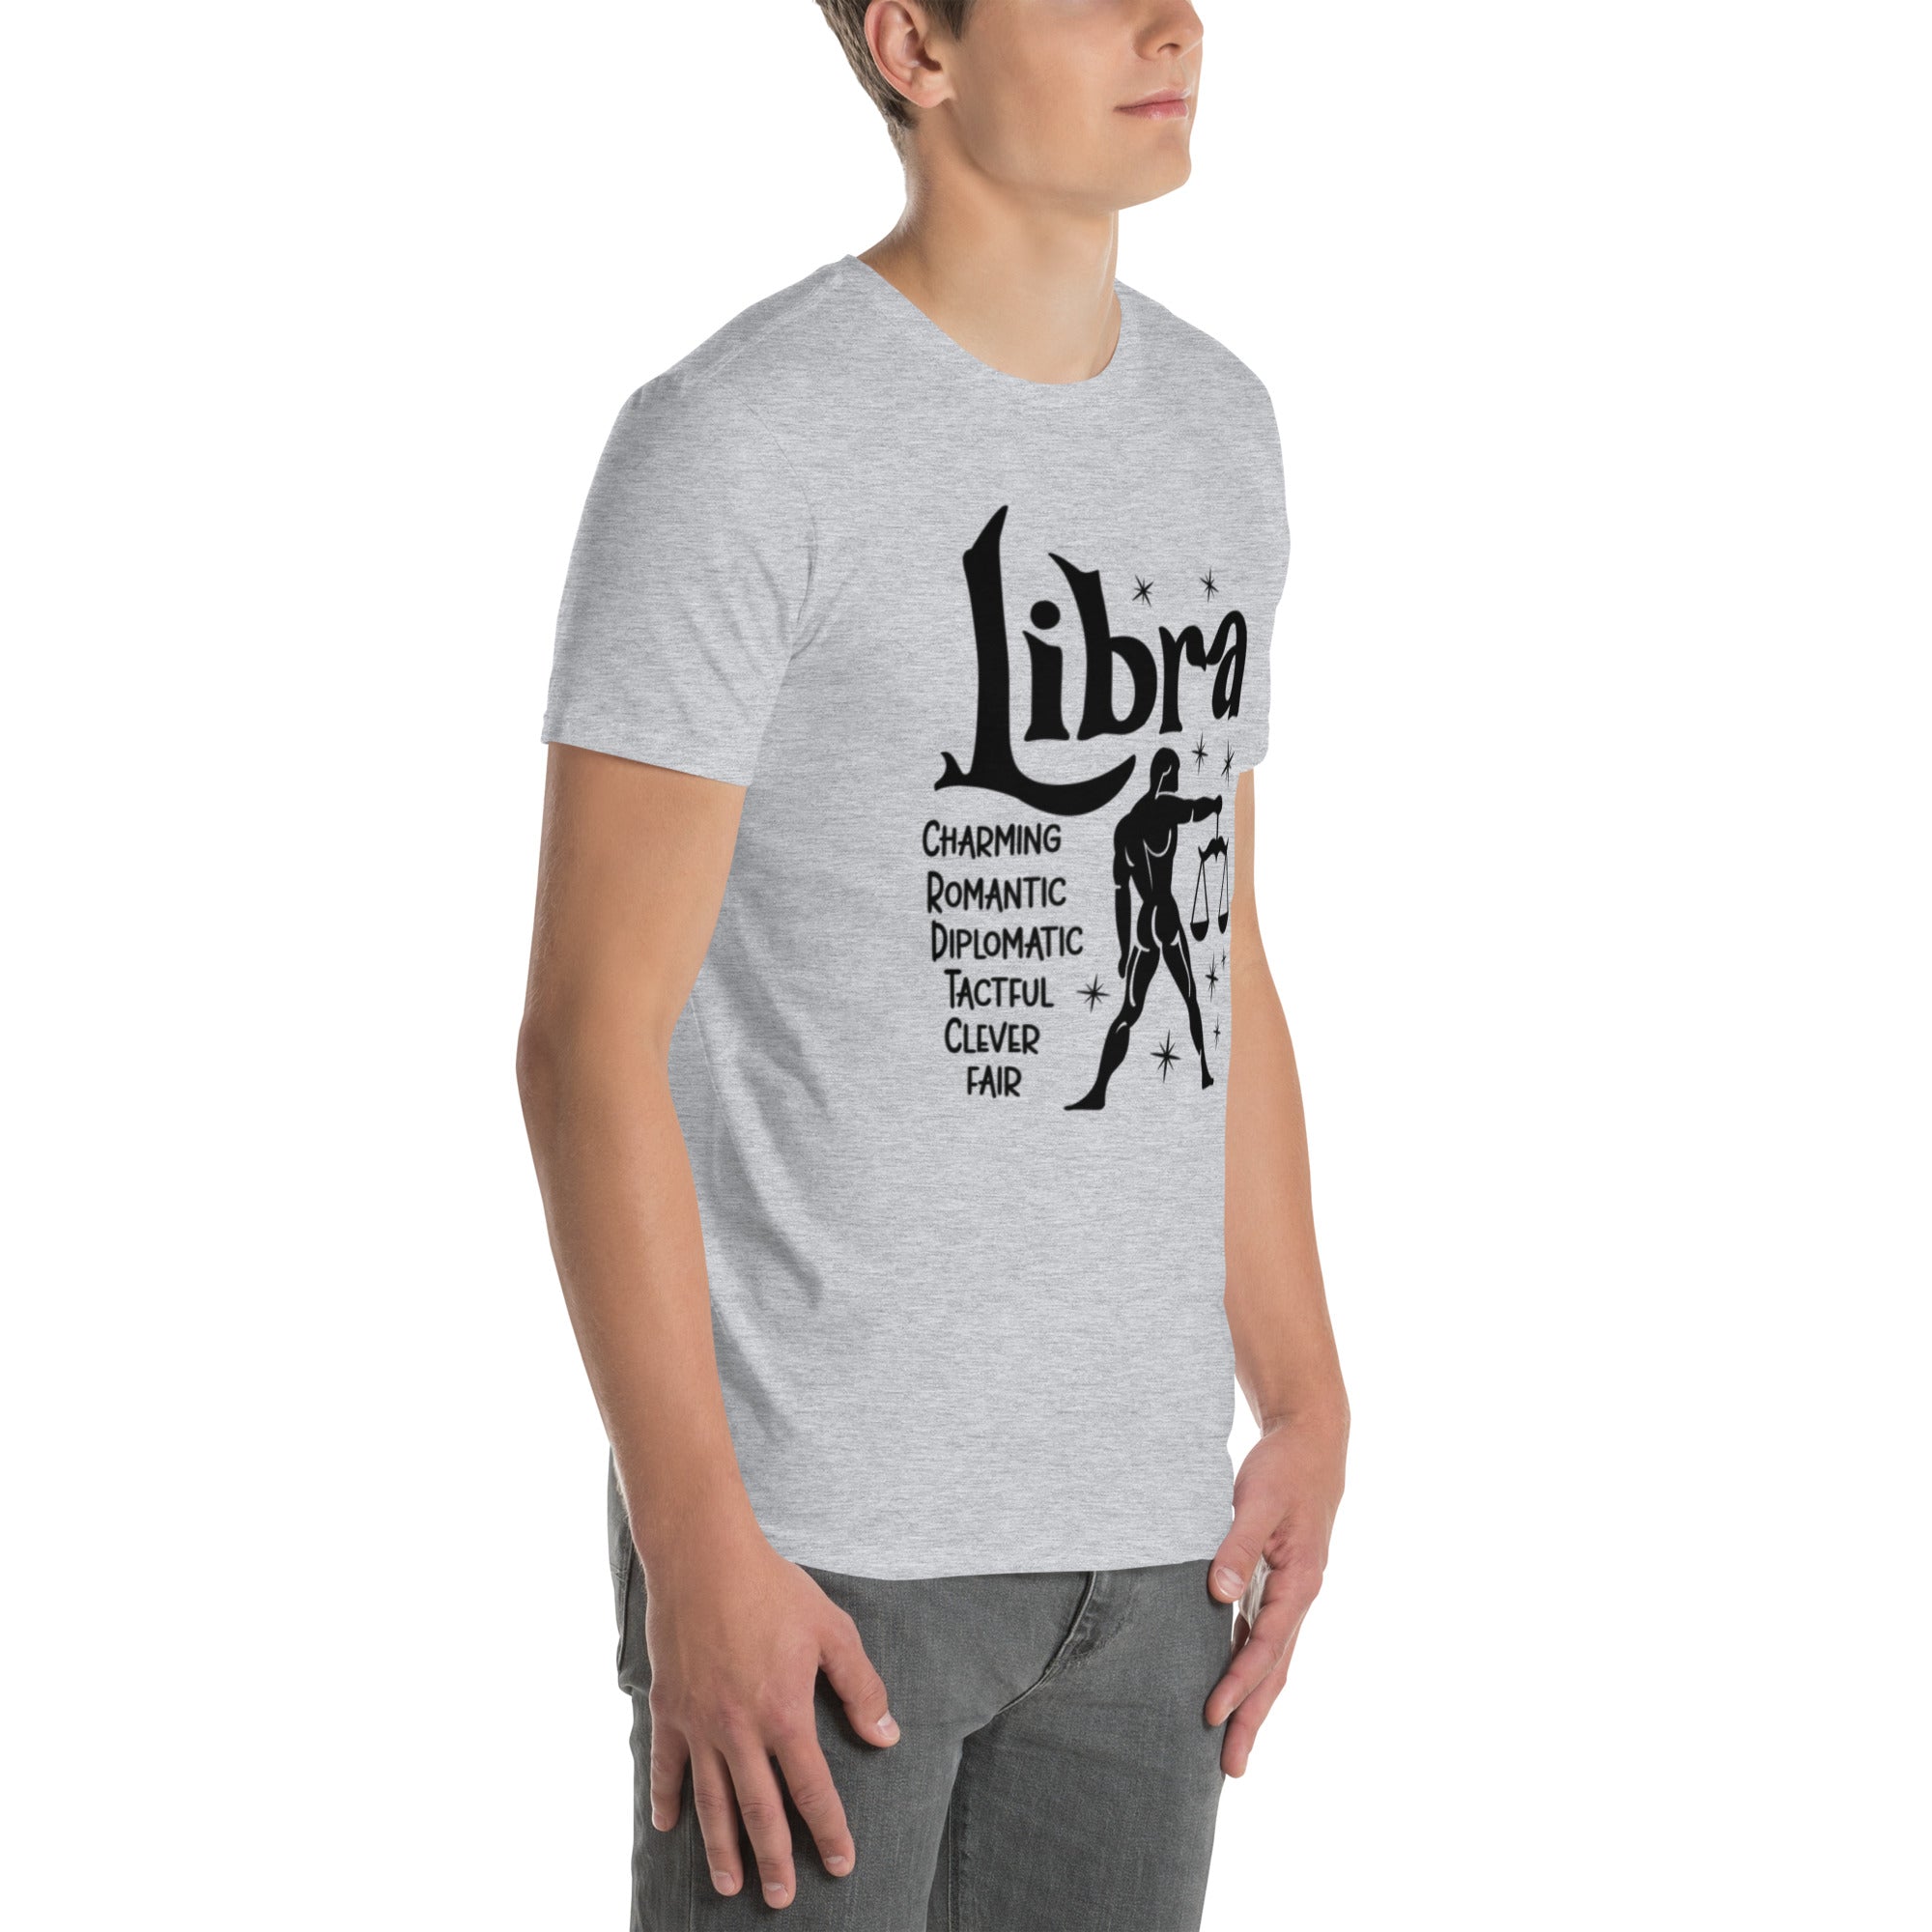 Short-Sleeve Unisex T-Shirt- Libra